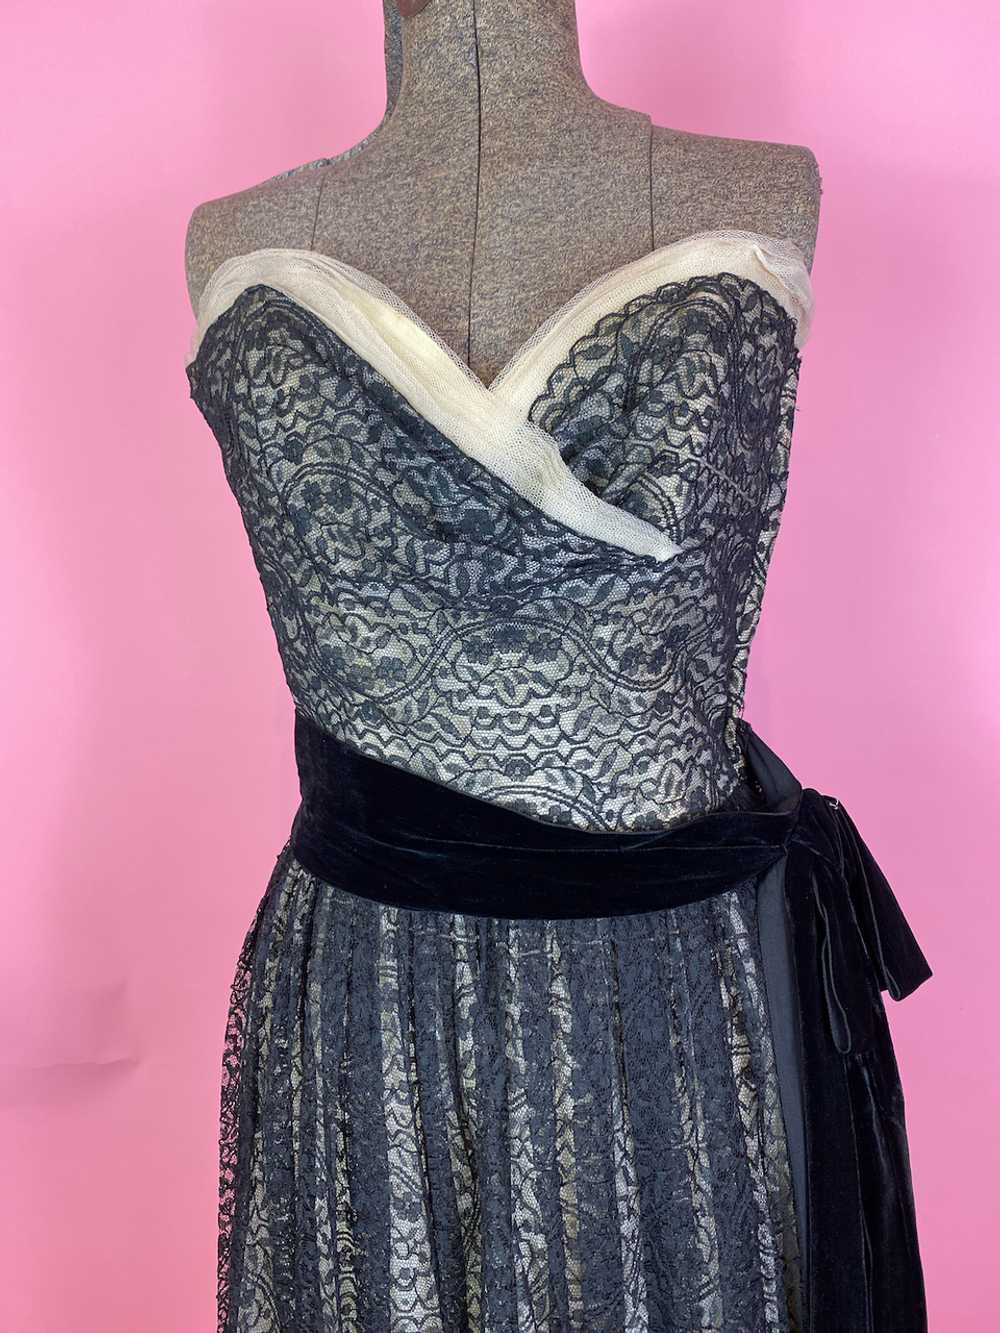 1950s Layered Lace Strapless Dress - image 2